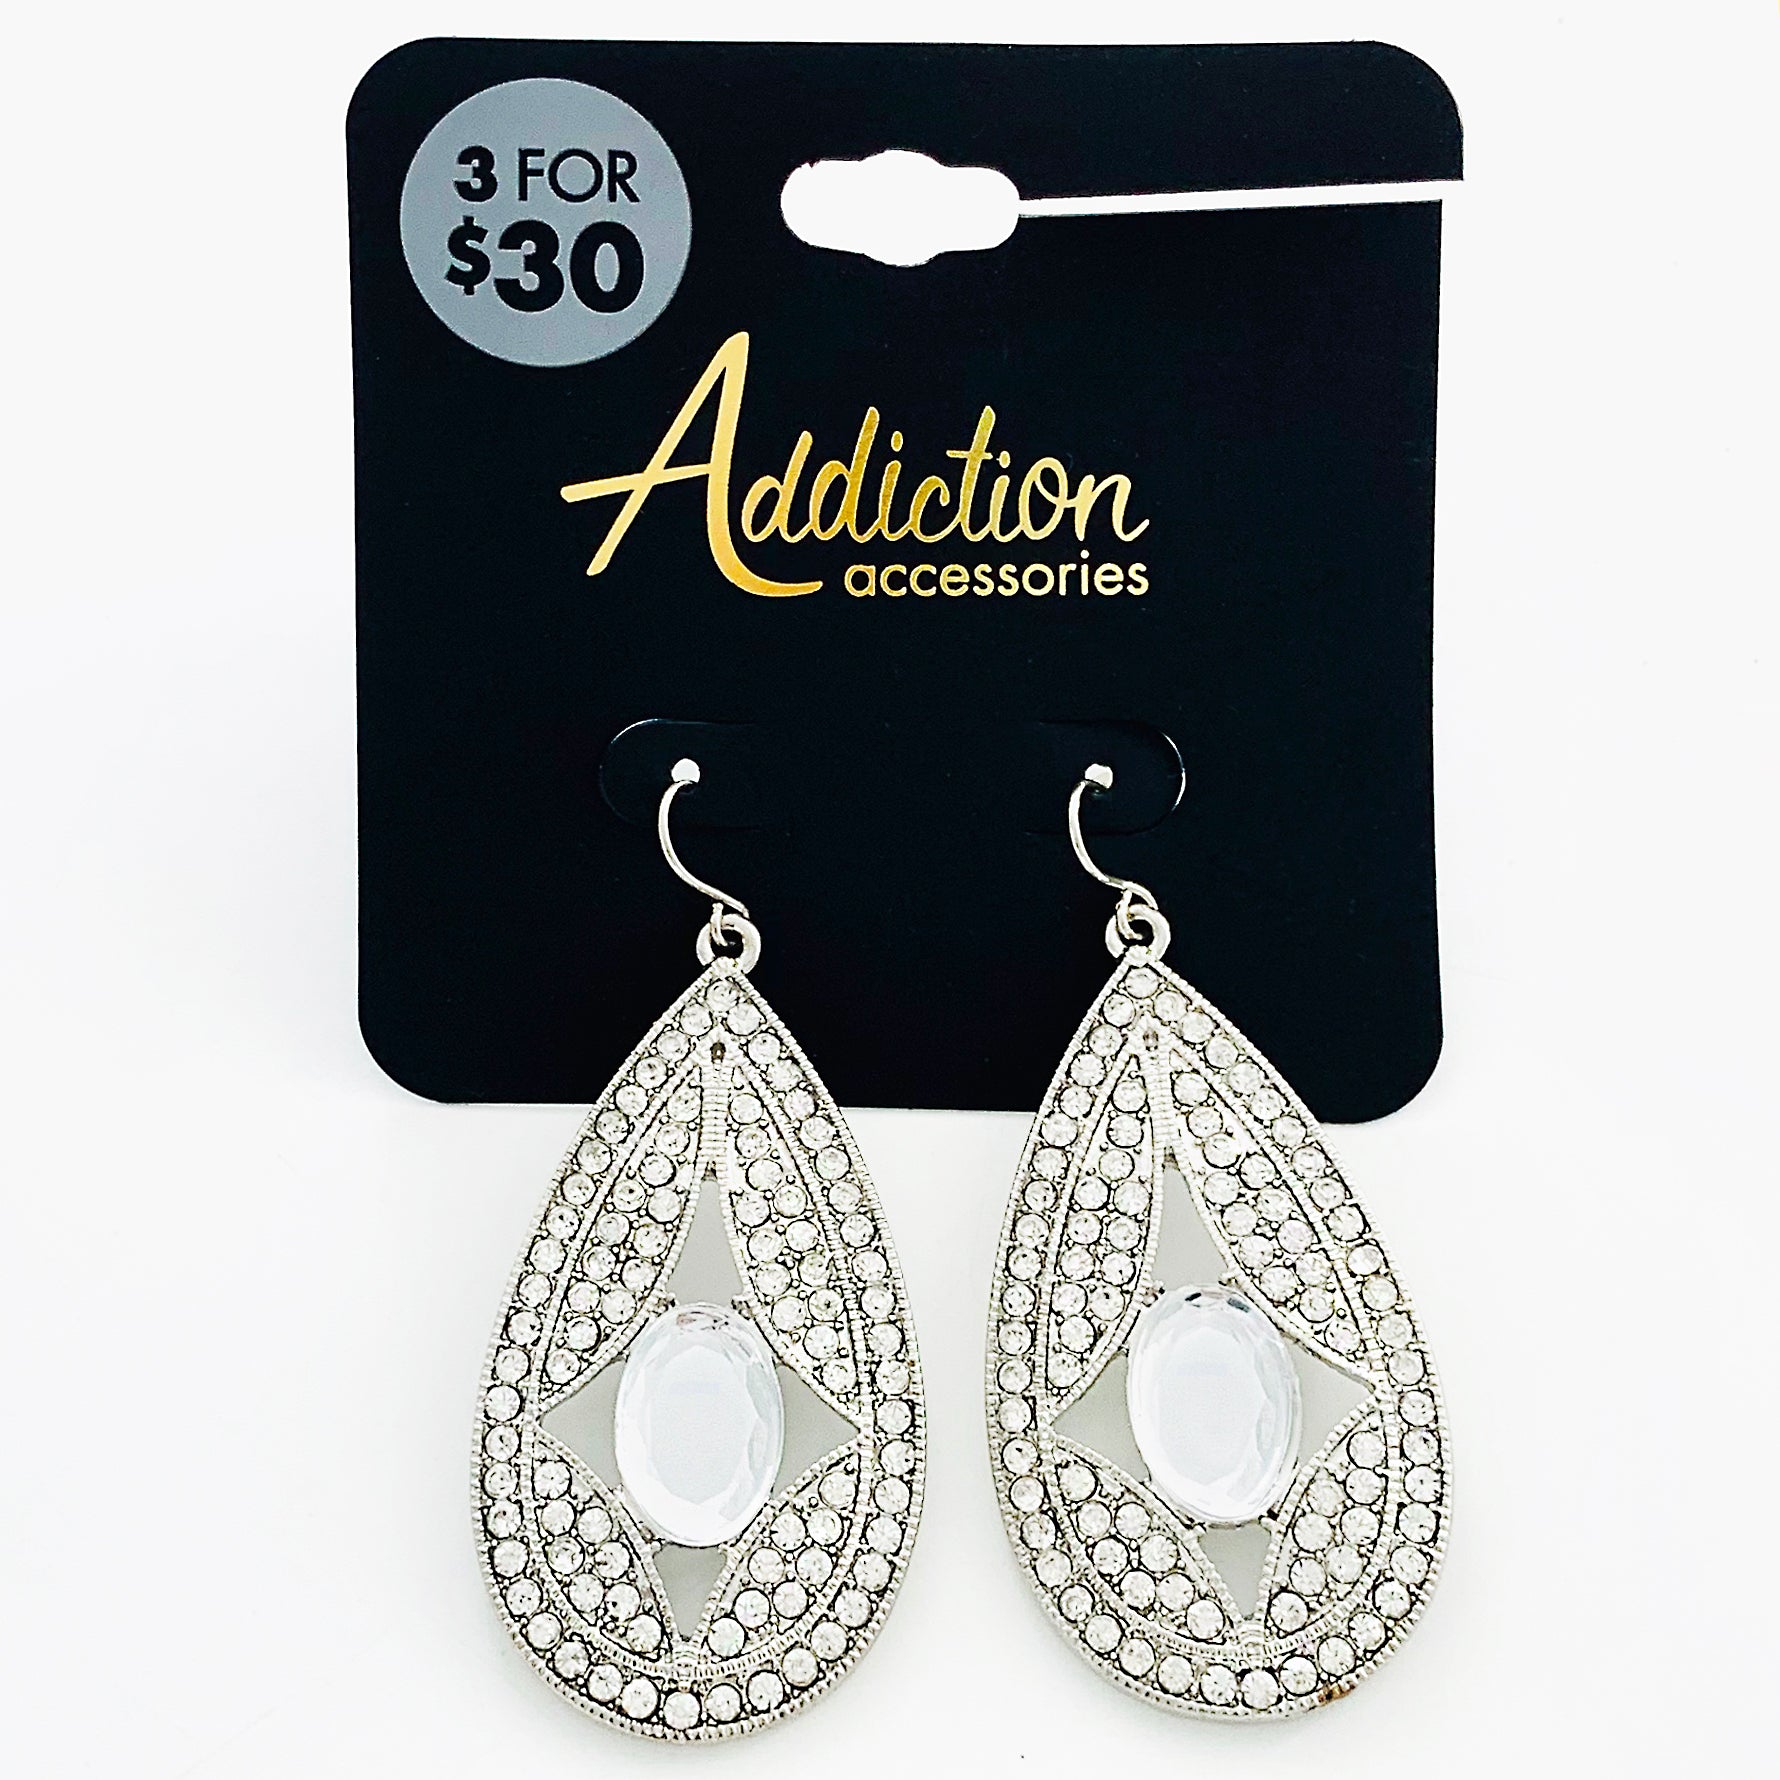 Art-deco inspired silver diamante earrings